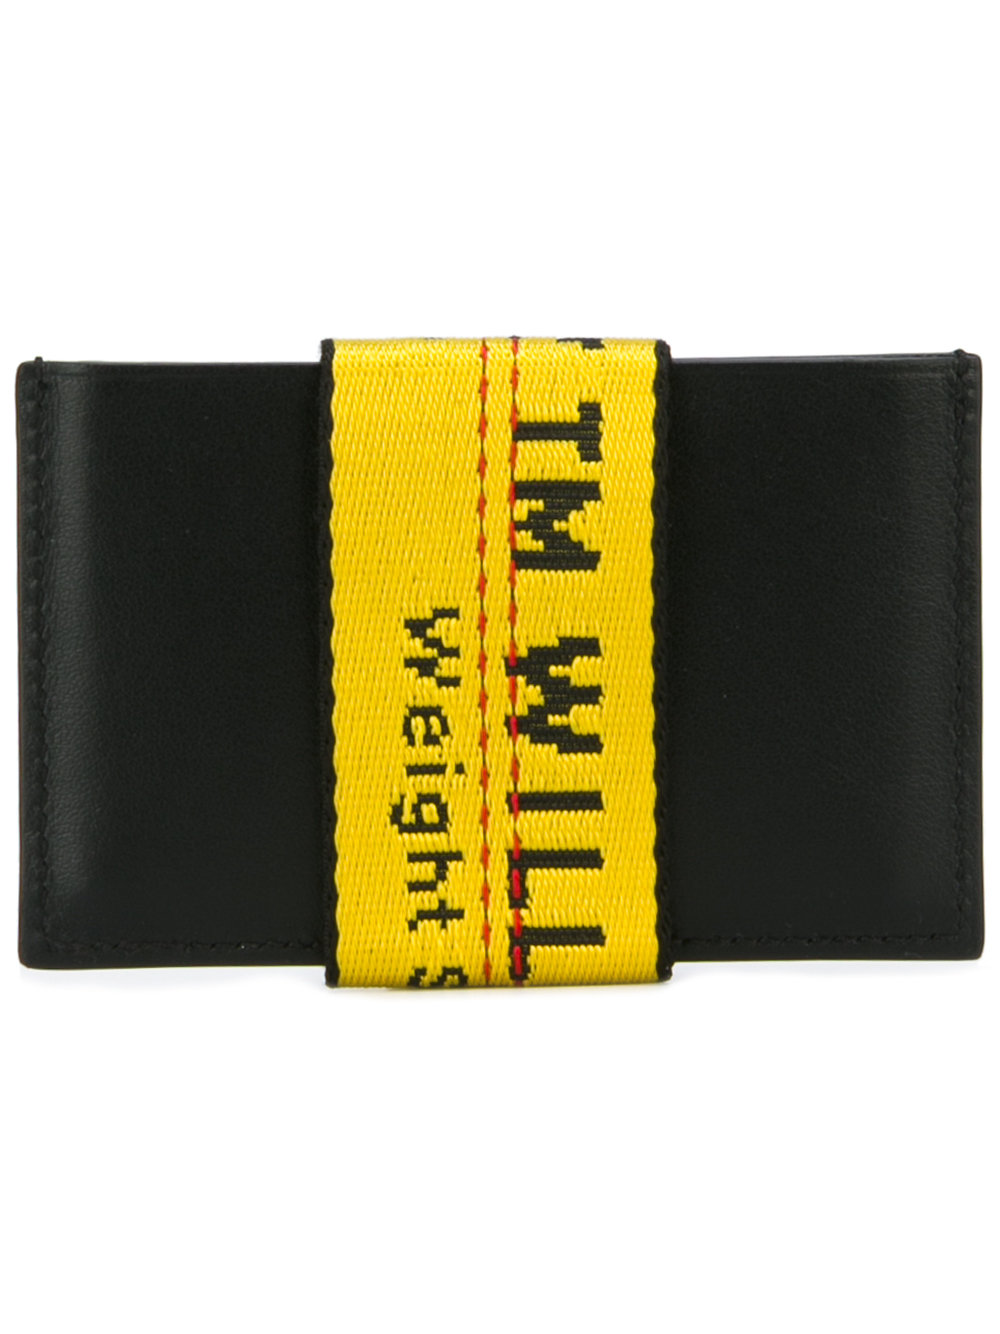 Off-White elasticated fastening cardholder black multicolor Men Accessories Wallets & Cardholders